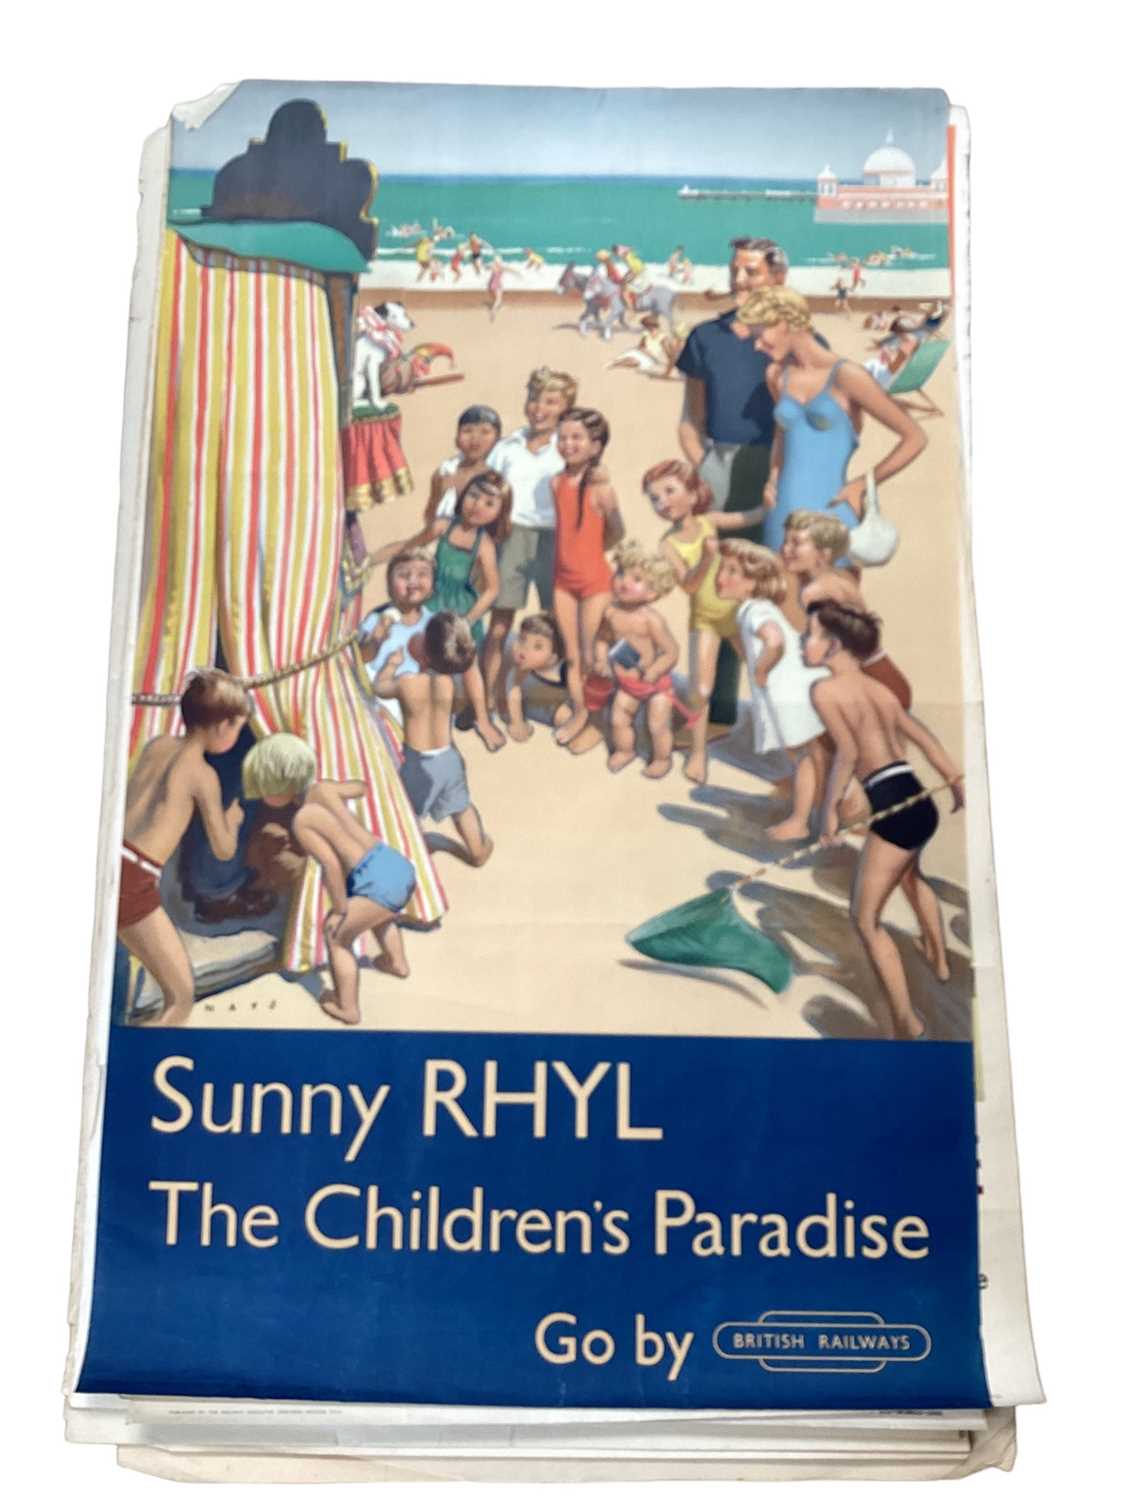 Original British Railways poster for 'Sunny Rhyl - The Children's Paradise', printed at the Baynard